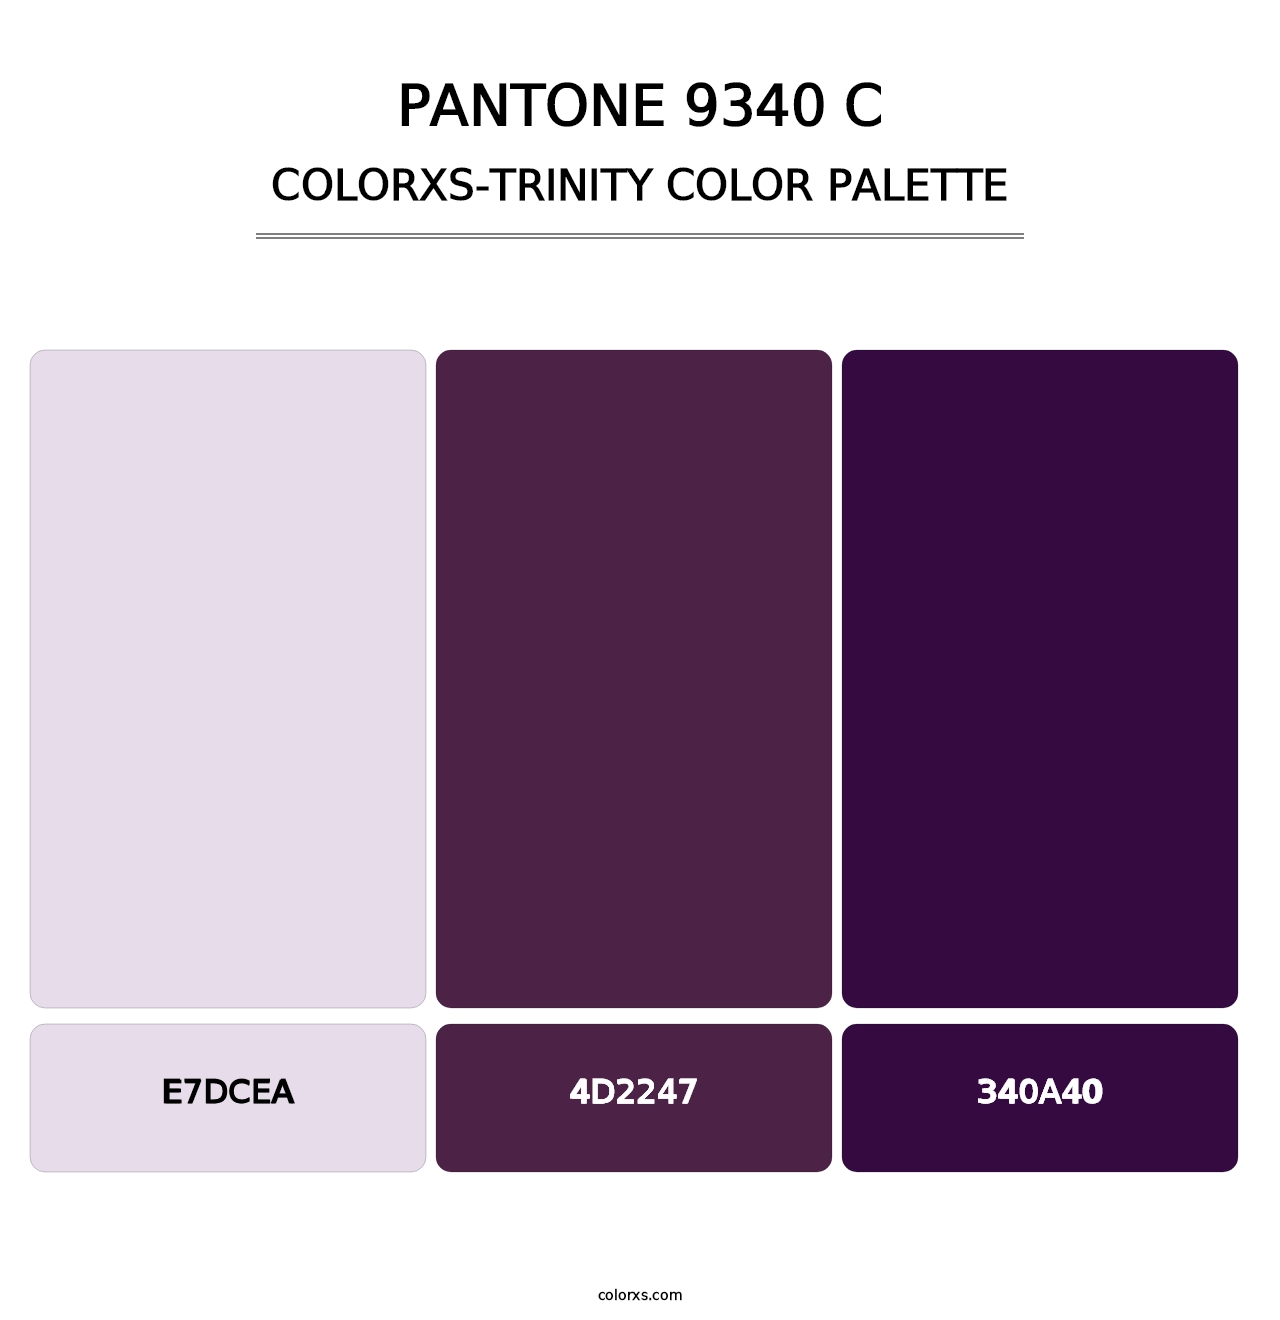 PANTONE 9340 C - Colorxs Trinity Palette